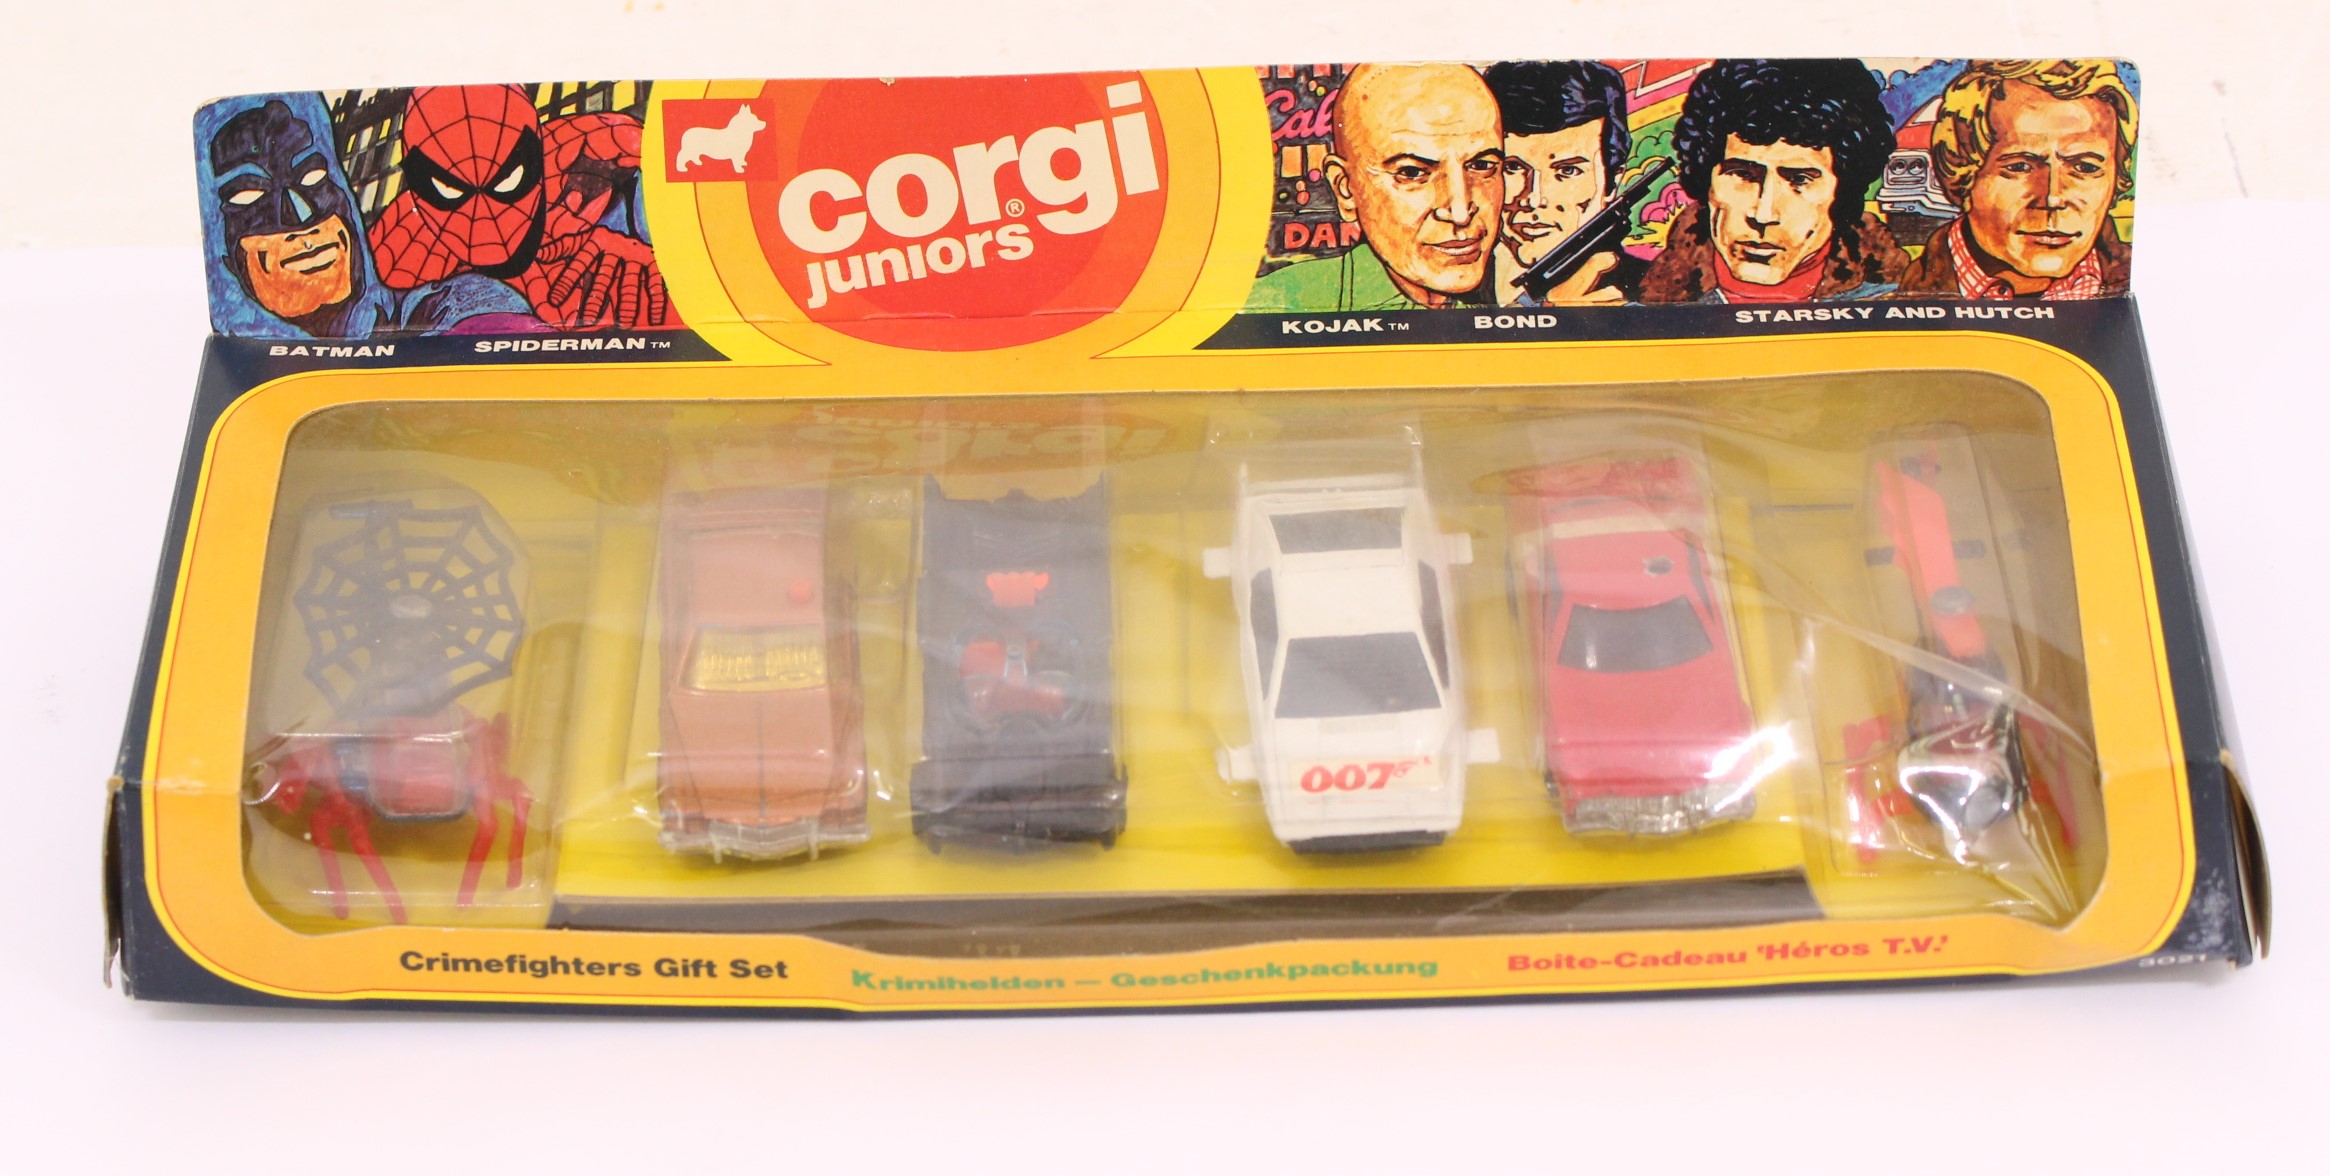 Corgi: A boxed Corgi Juniors, Crimefighters Gift Set, Reference No. 3021. Containing six cars to - Image 2 of 3